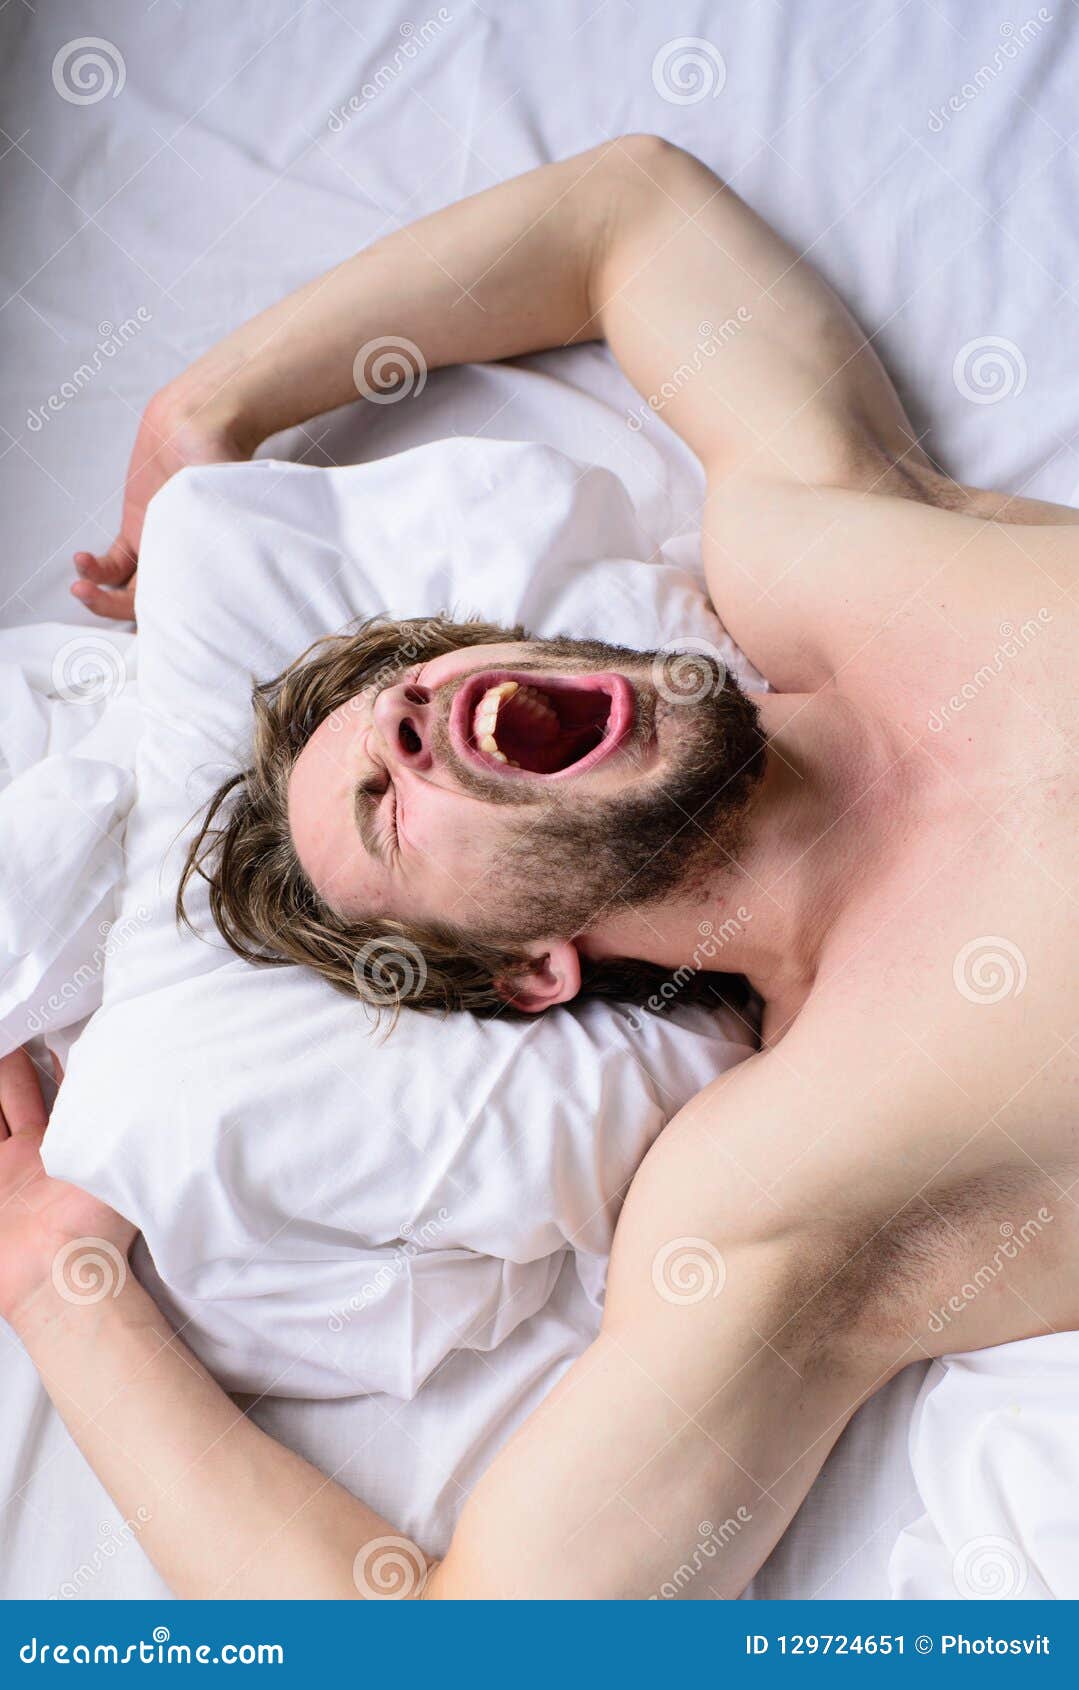 sexy wife sleeps nude free hd photo